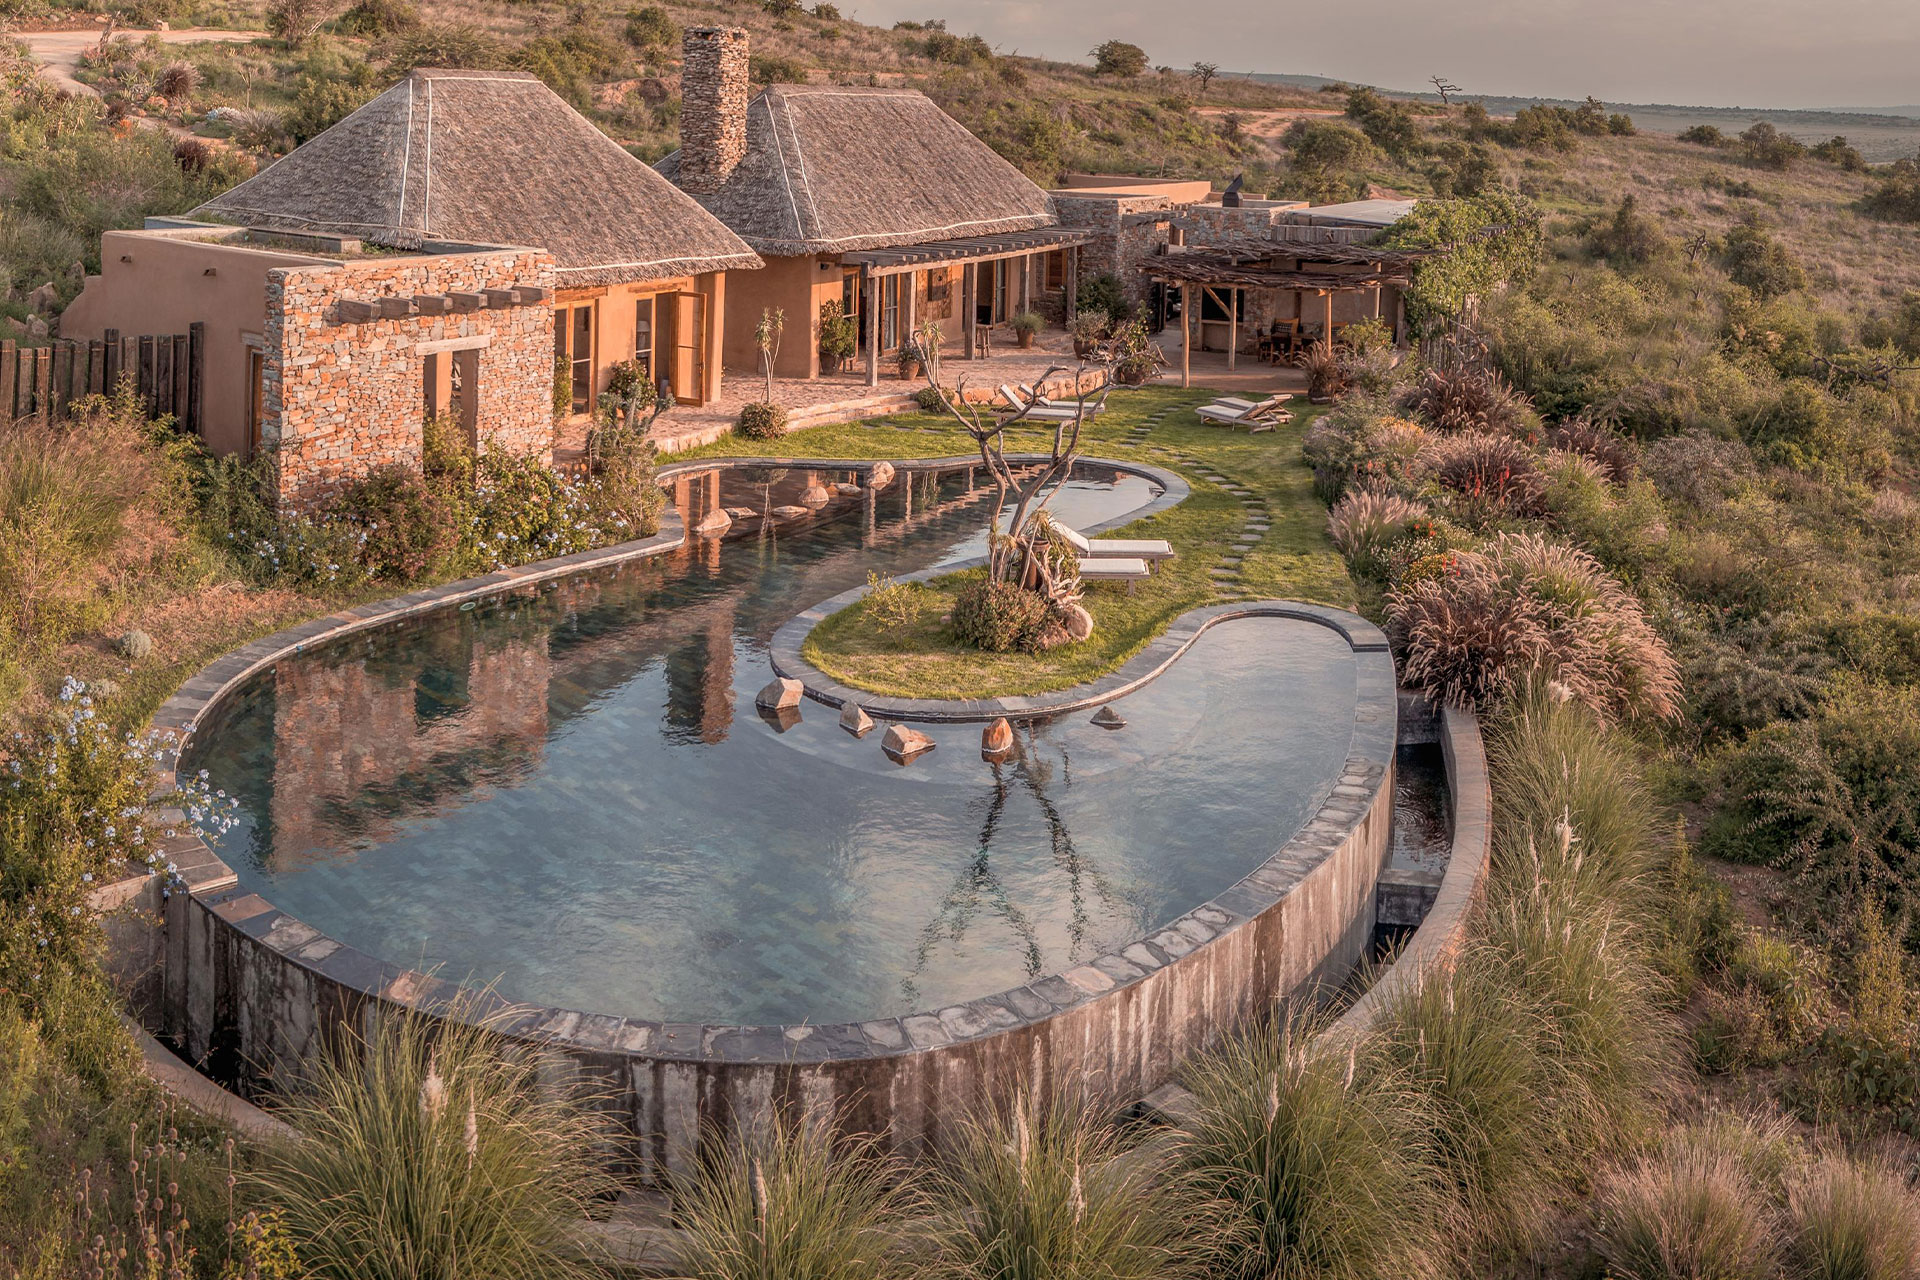 Lengishu House and outdoor pool in Borana Conservancy, Kenya.